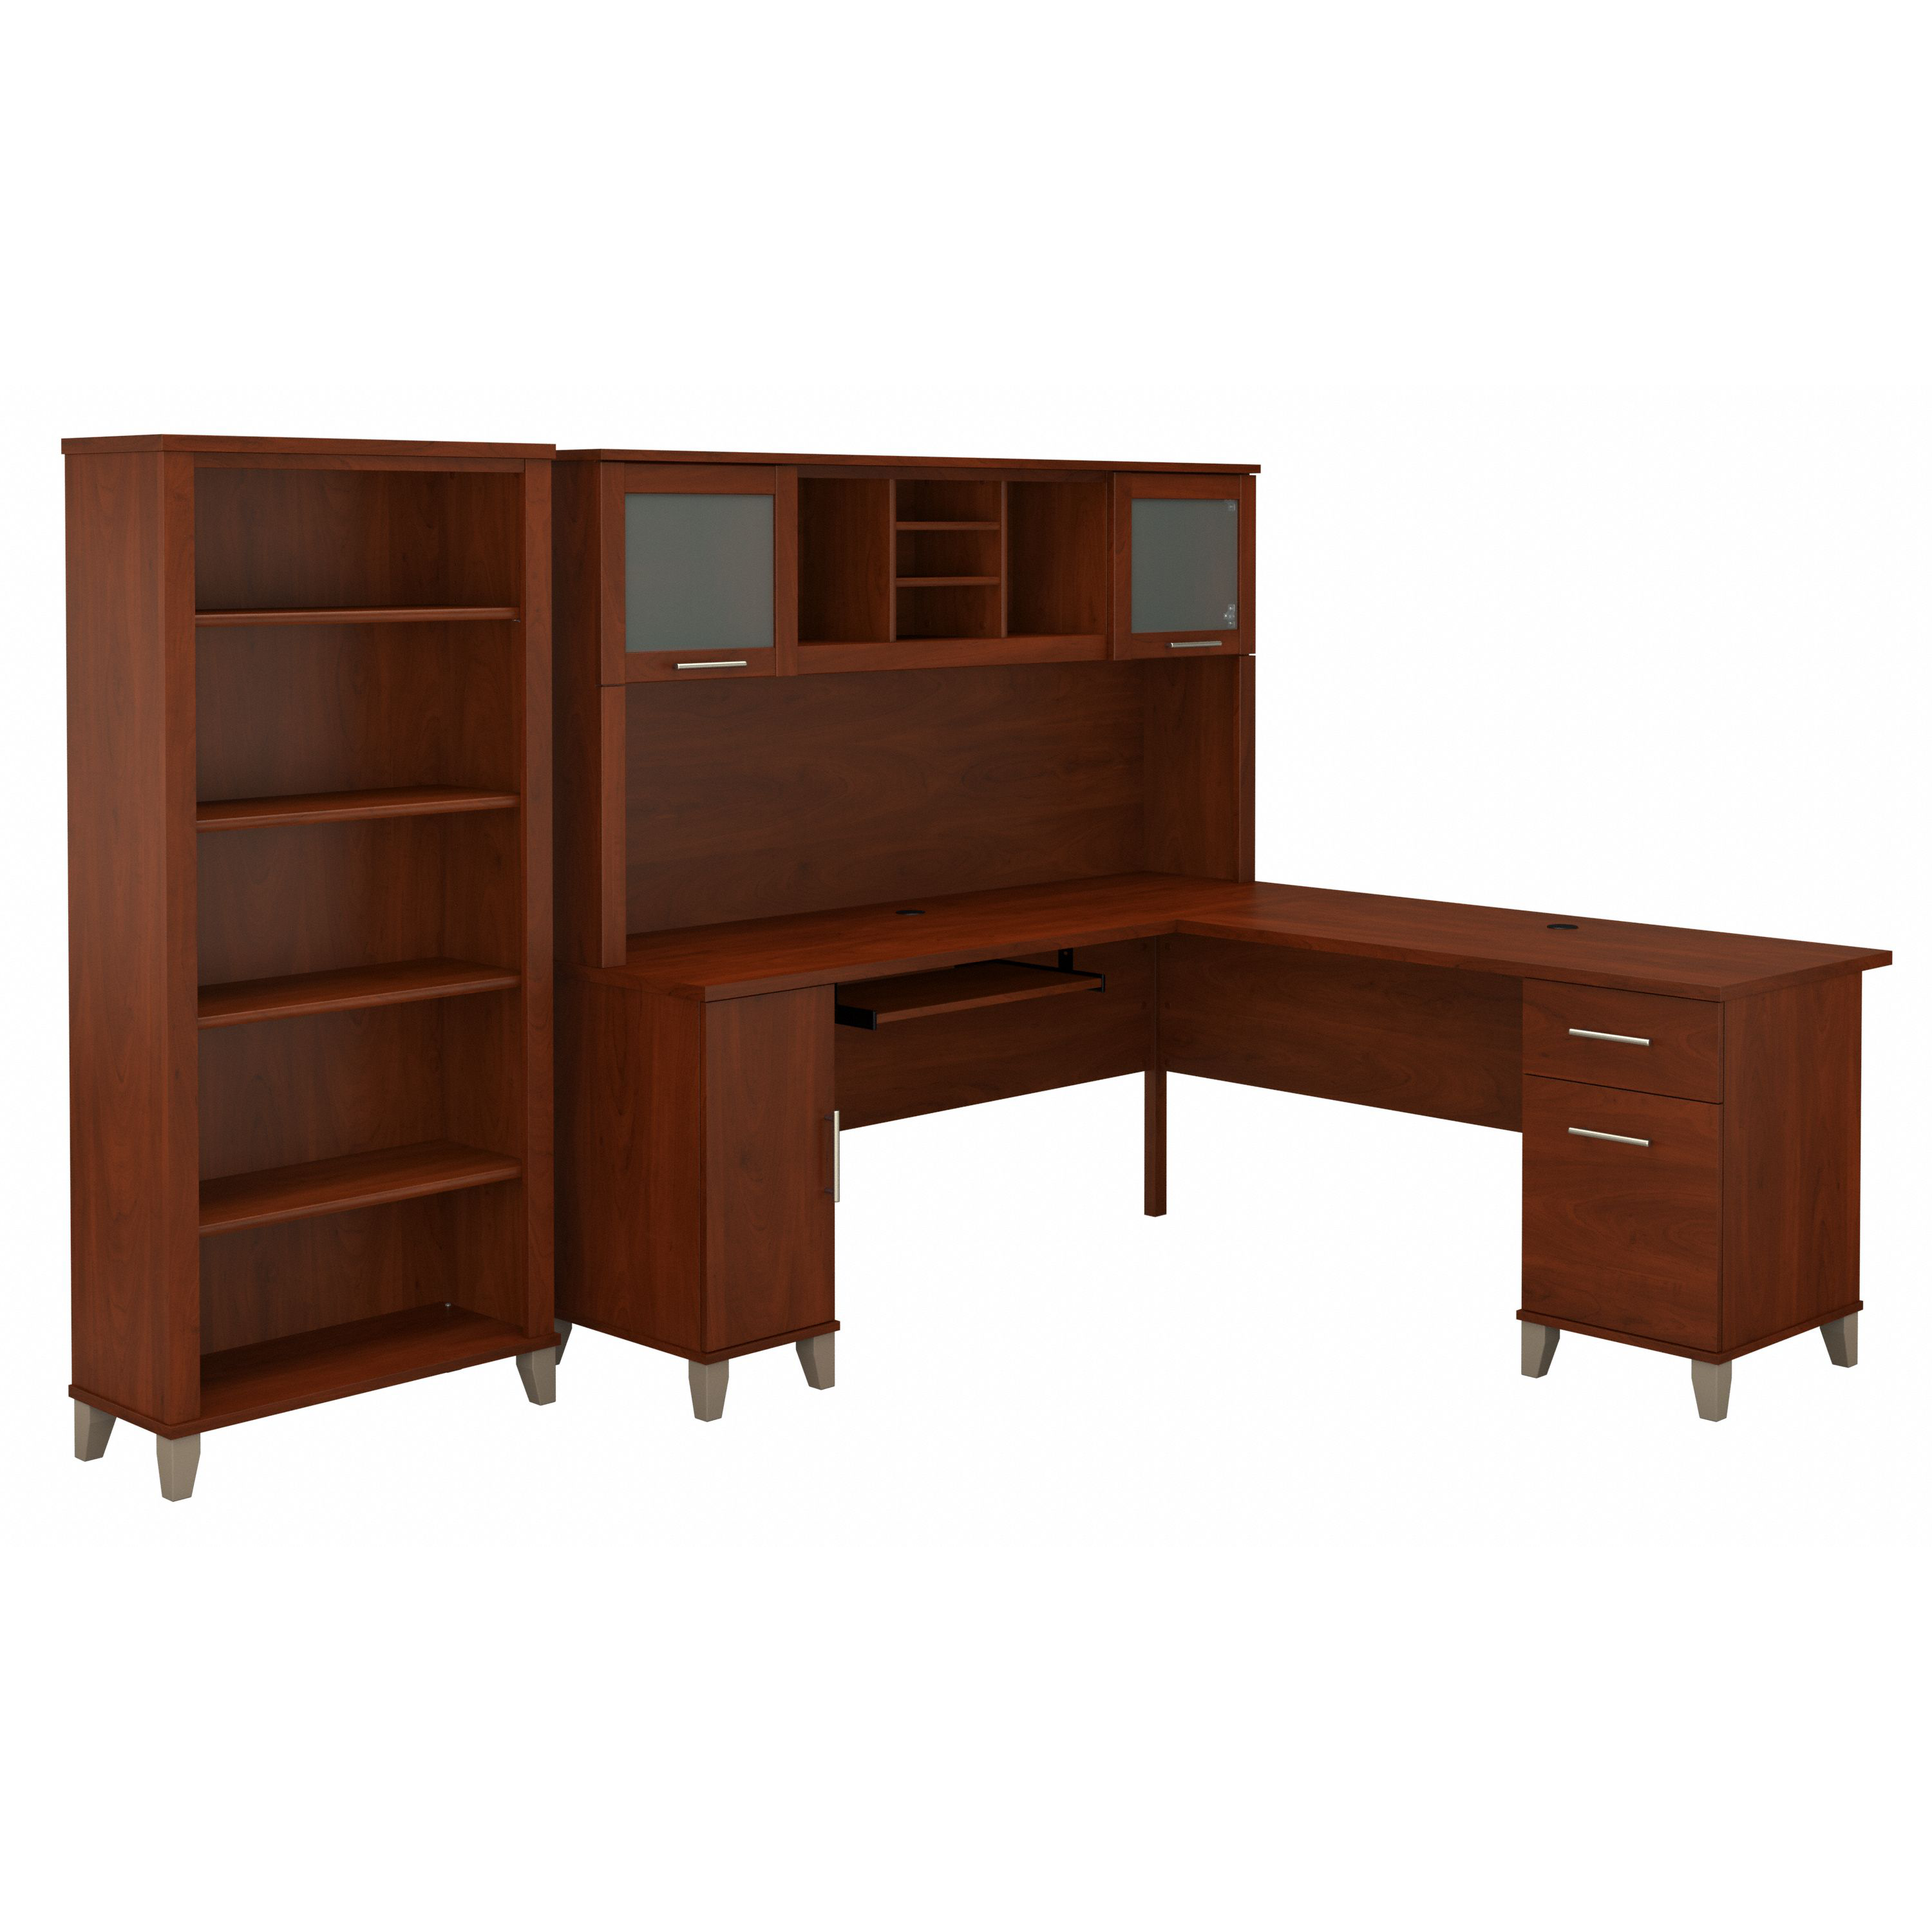 Shop Bush Furniture Somerset 72W L Shaped Desk with Hutch and 5 Shelf Bookcase 02 SET011HC #color_hansen cherry